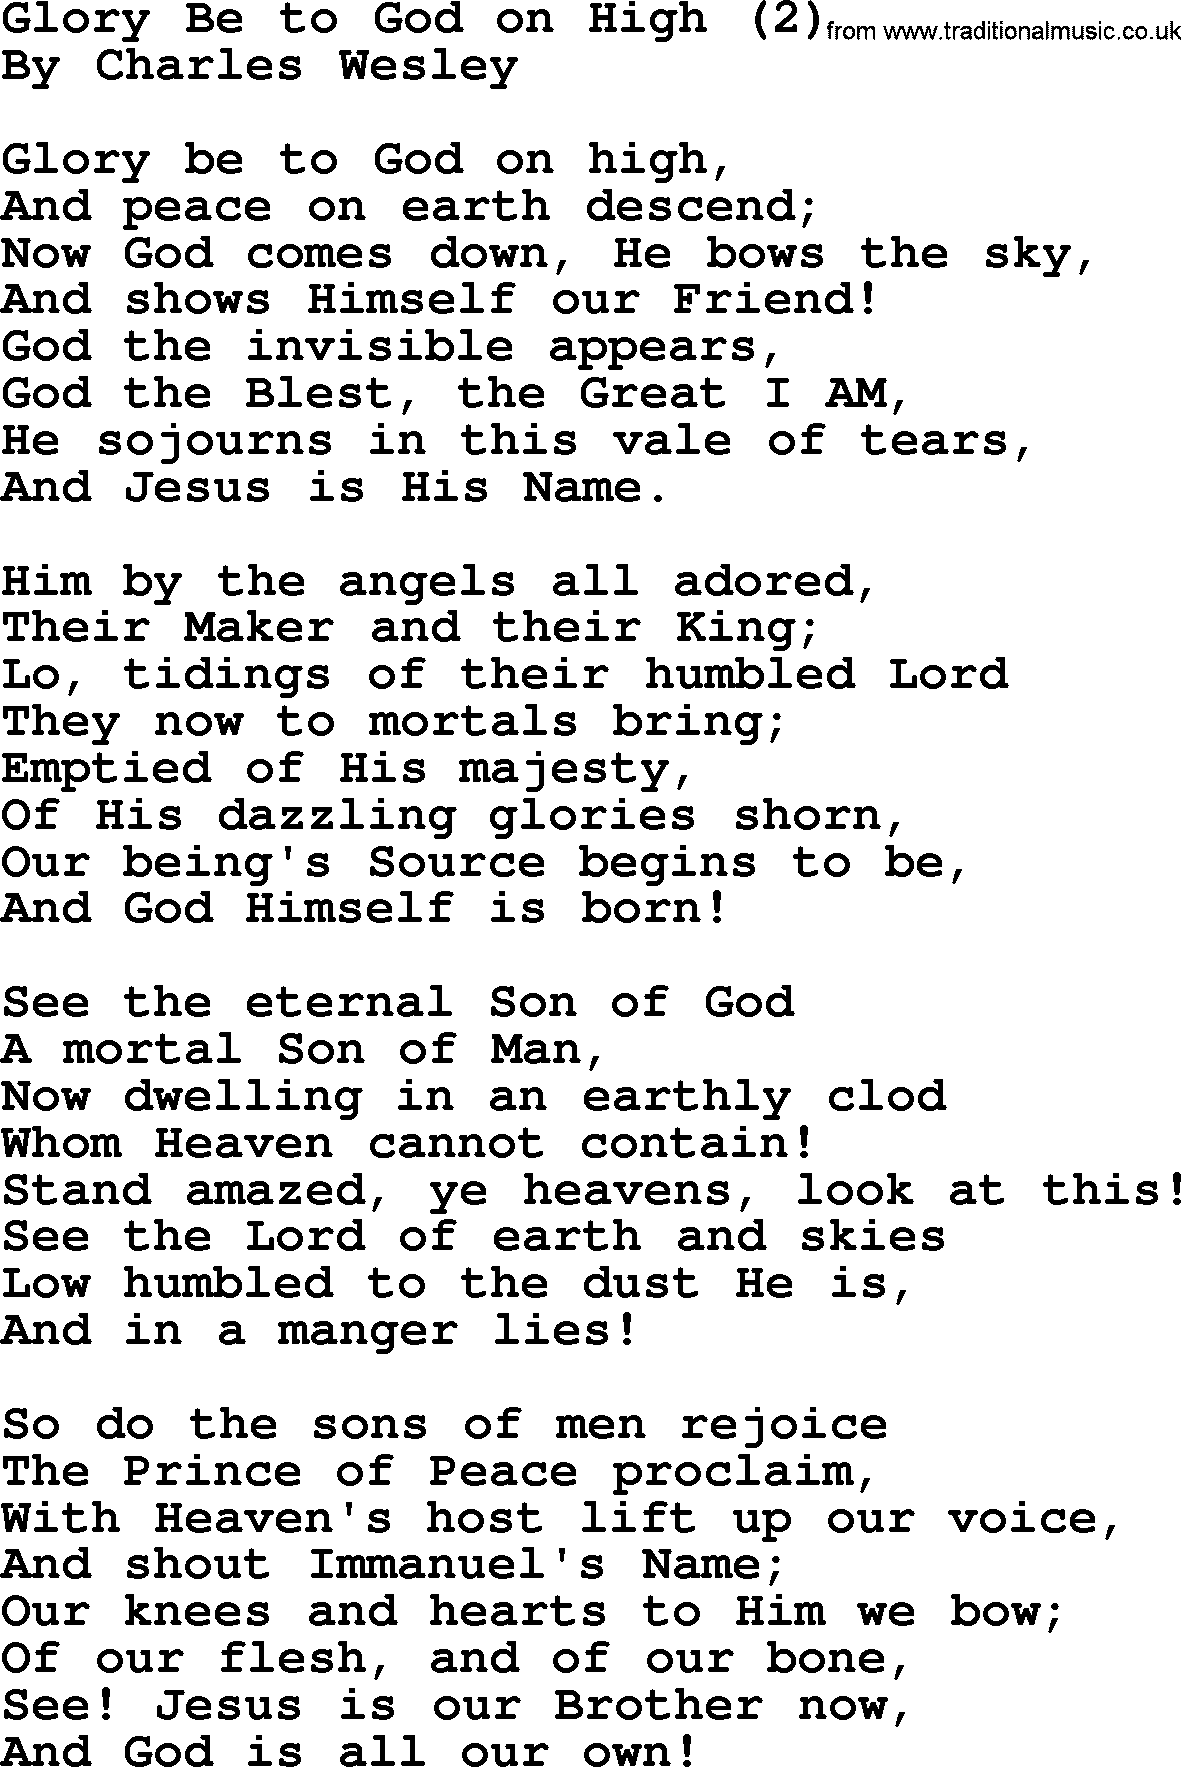 Charles Wesley hymn: Glory Be to God on High (2), lyrics